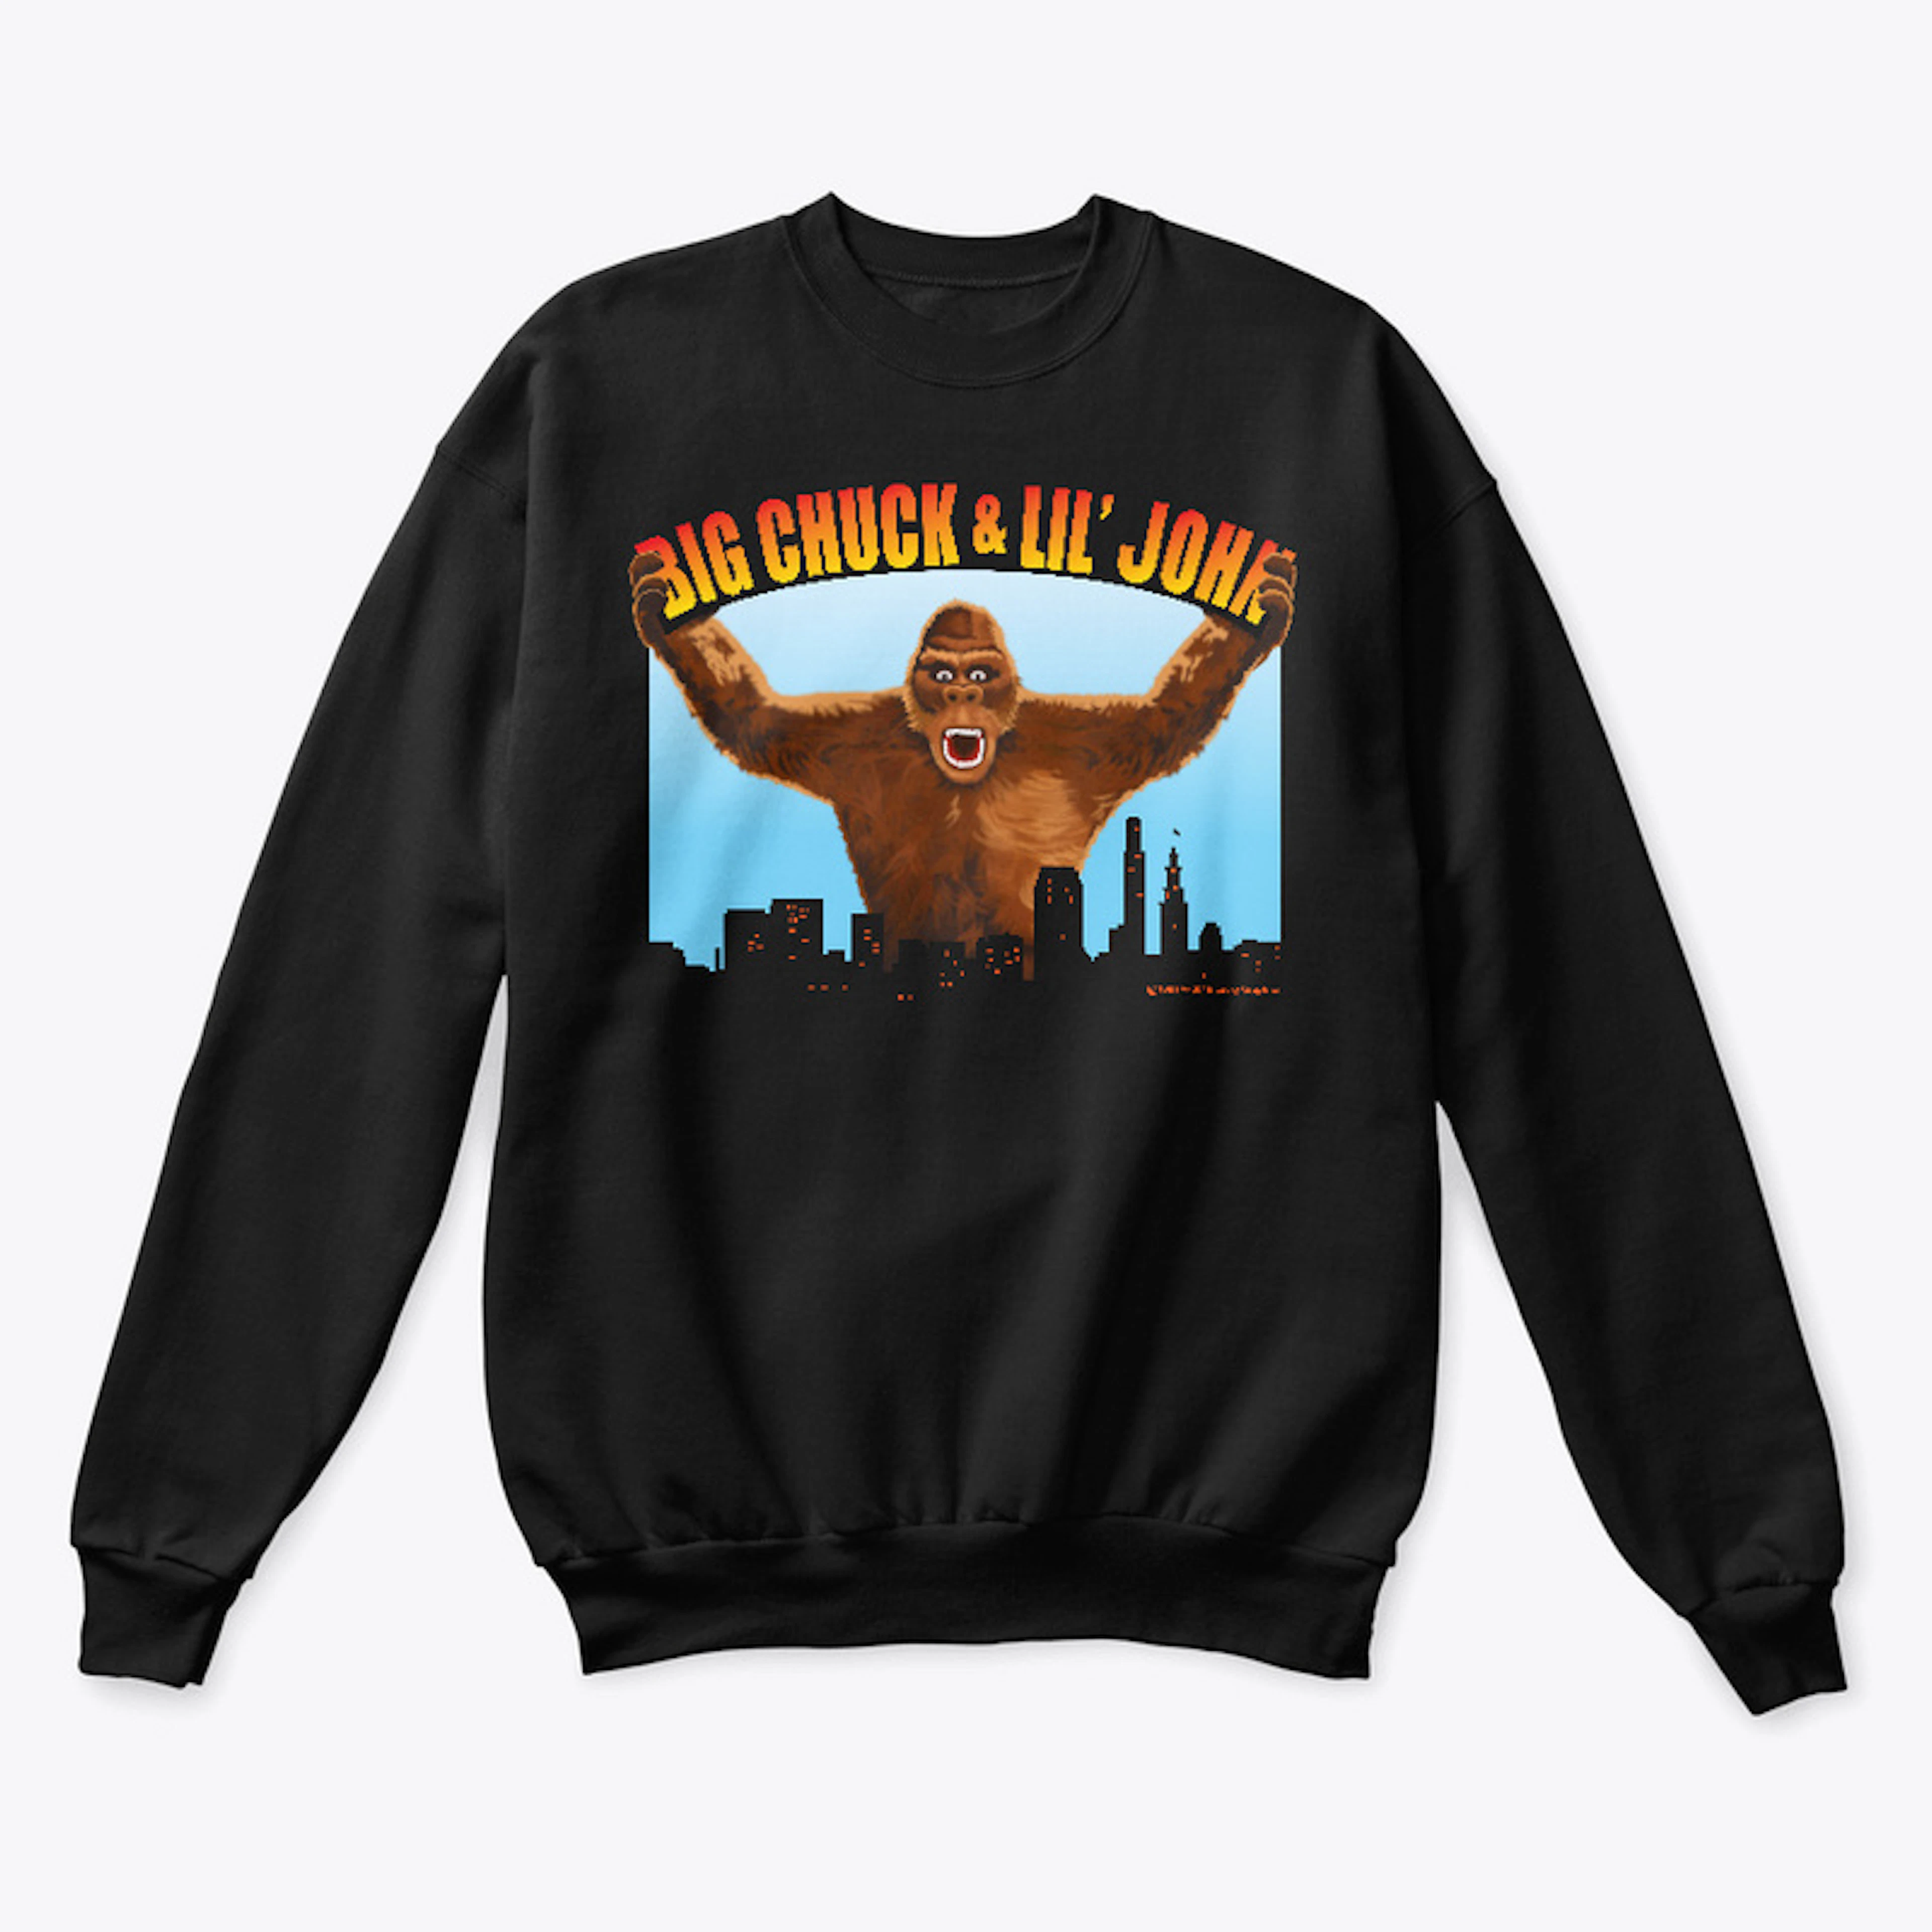 The Official Big Chuck & Lil' John Shirt